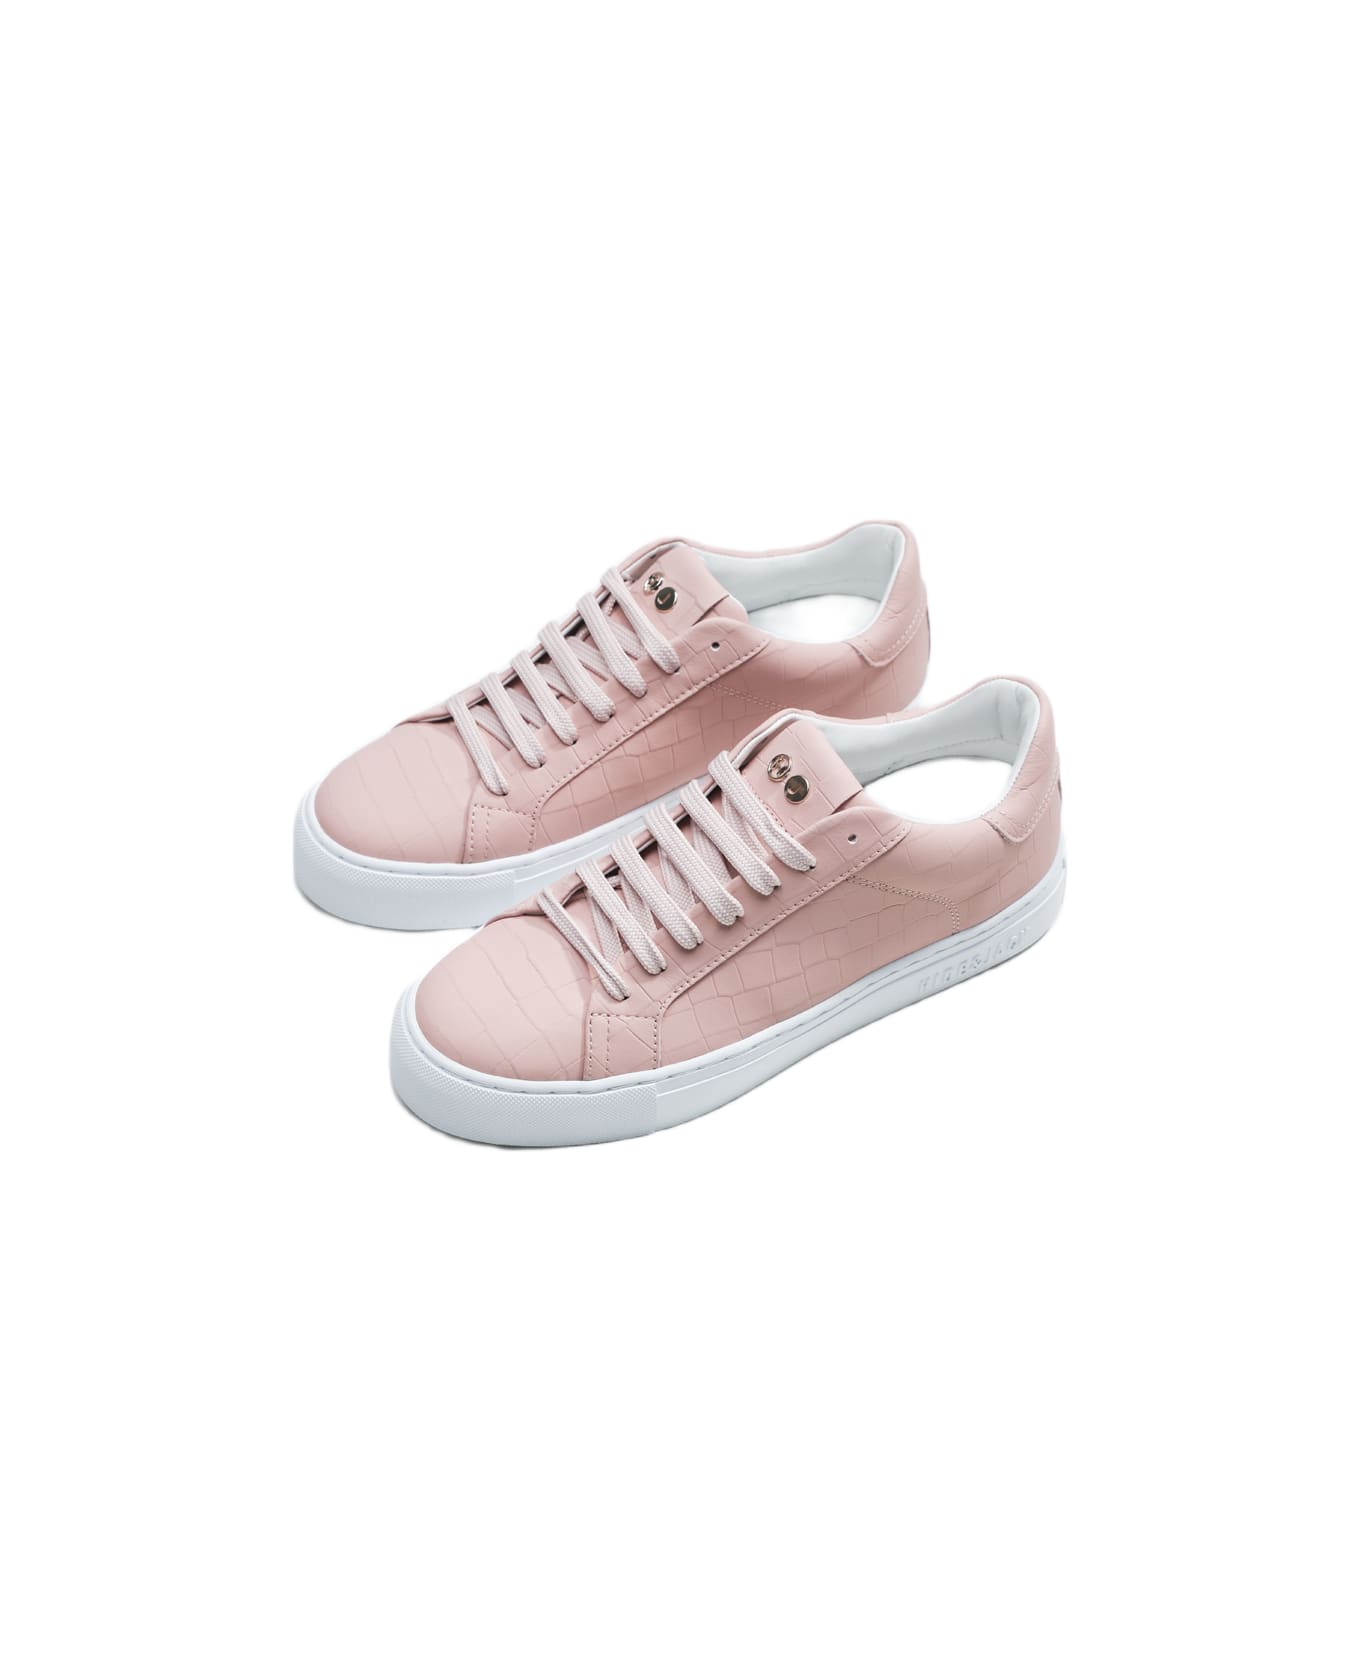 Hide&Jack Low Top Sneaker - Essence Pink White スニーカー